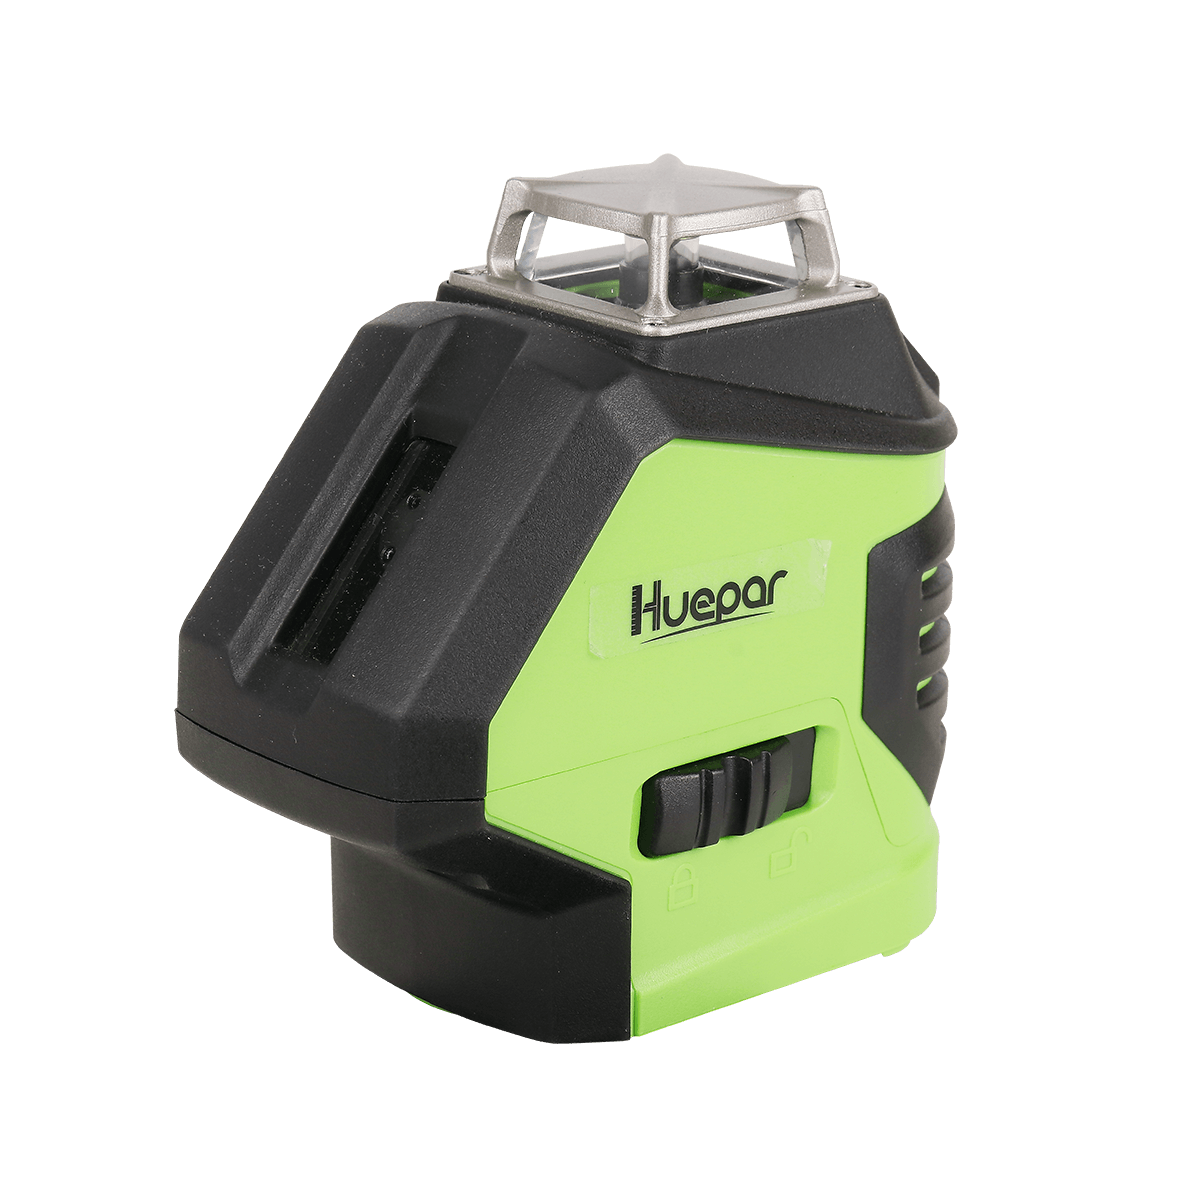 Huepar 360 Degree Cross Line Laser Level Green Beam Self-Leveling Laser  Leveler Tools with 2 Plumb Dots & Magnetic Pivoting Base 621CG 